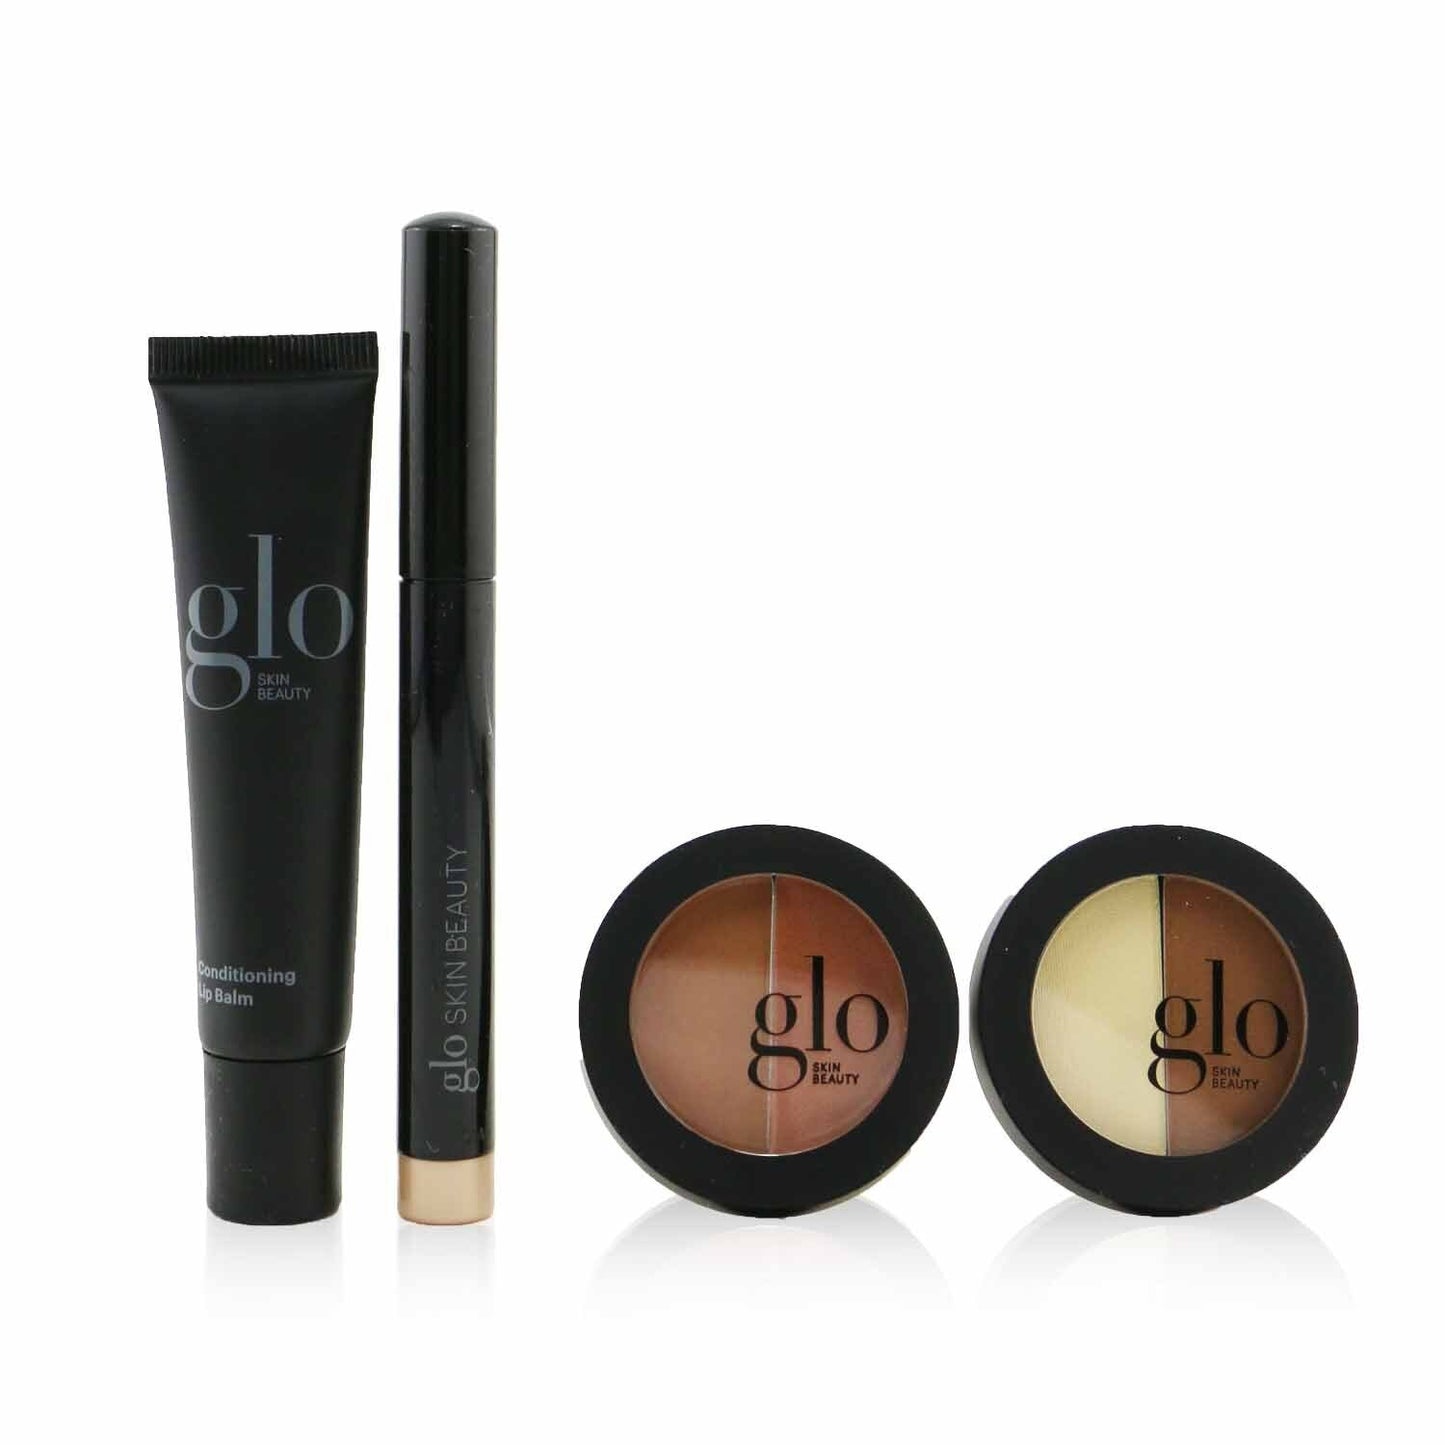 In The Nudes (Shadow Stick + Cream Blush Duo + Eye Shadow Duo + Lip Balm) - # Backlit Bronze Edition